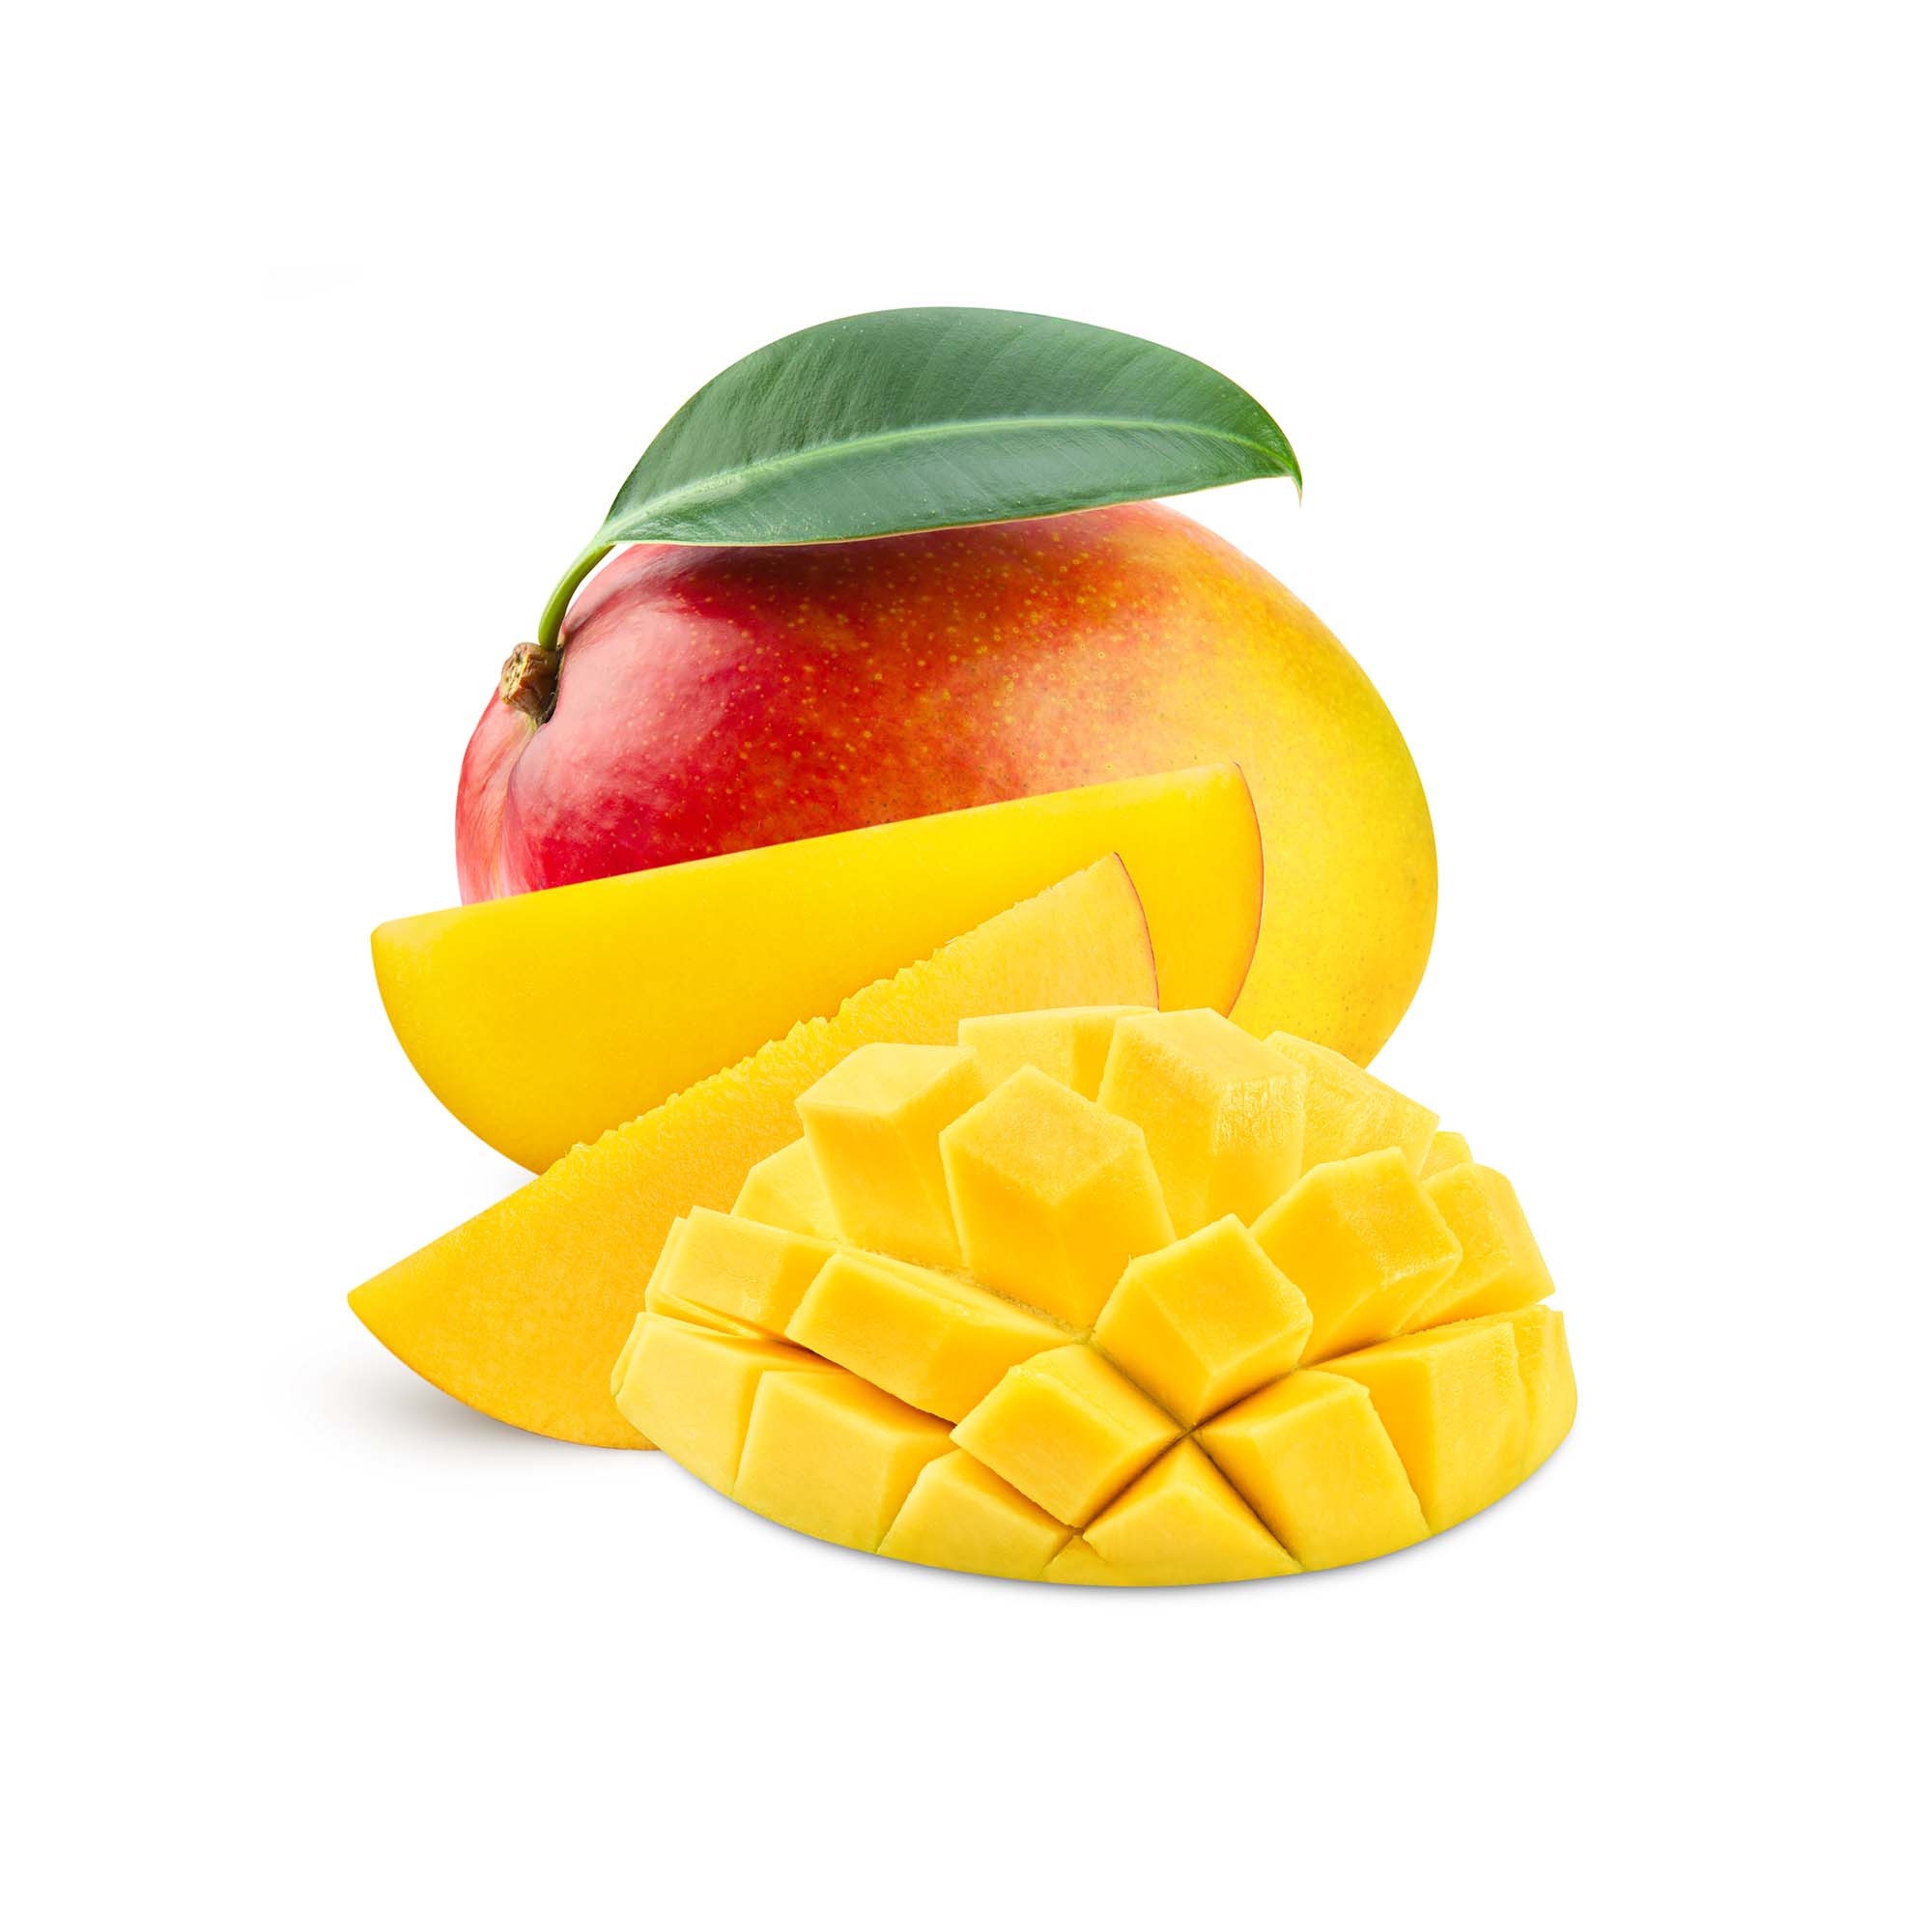 Mango - Haden | Exotic Fruits - Rare & Tropical Exotic Fruit Shop UK